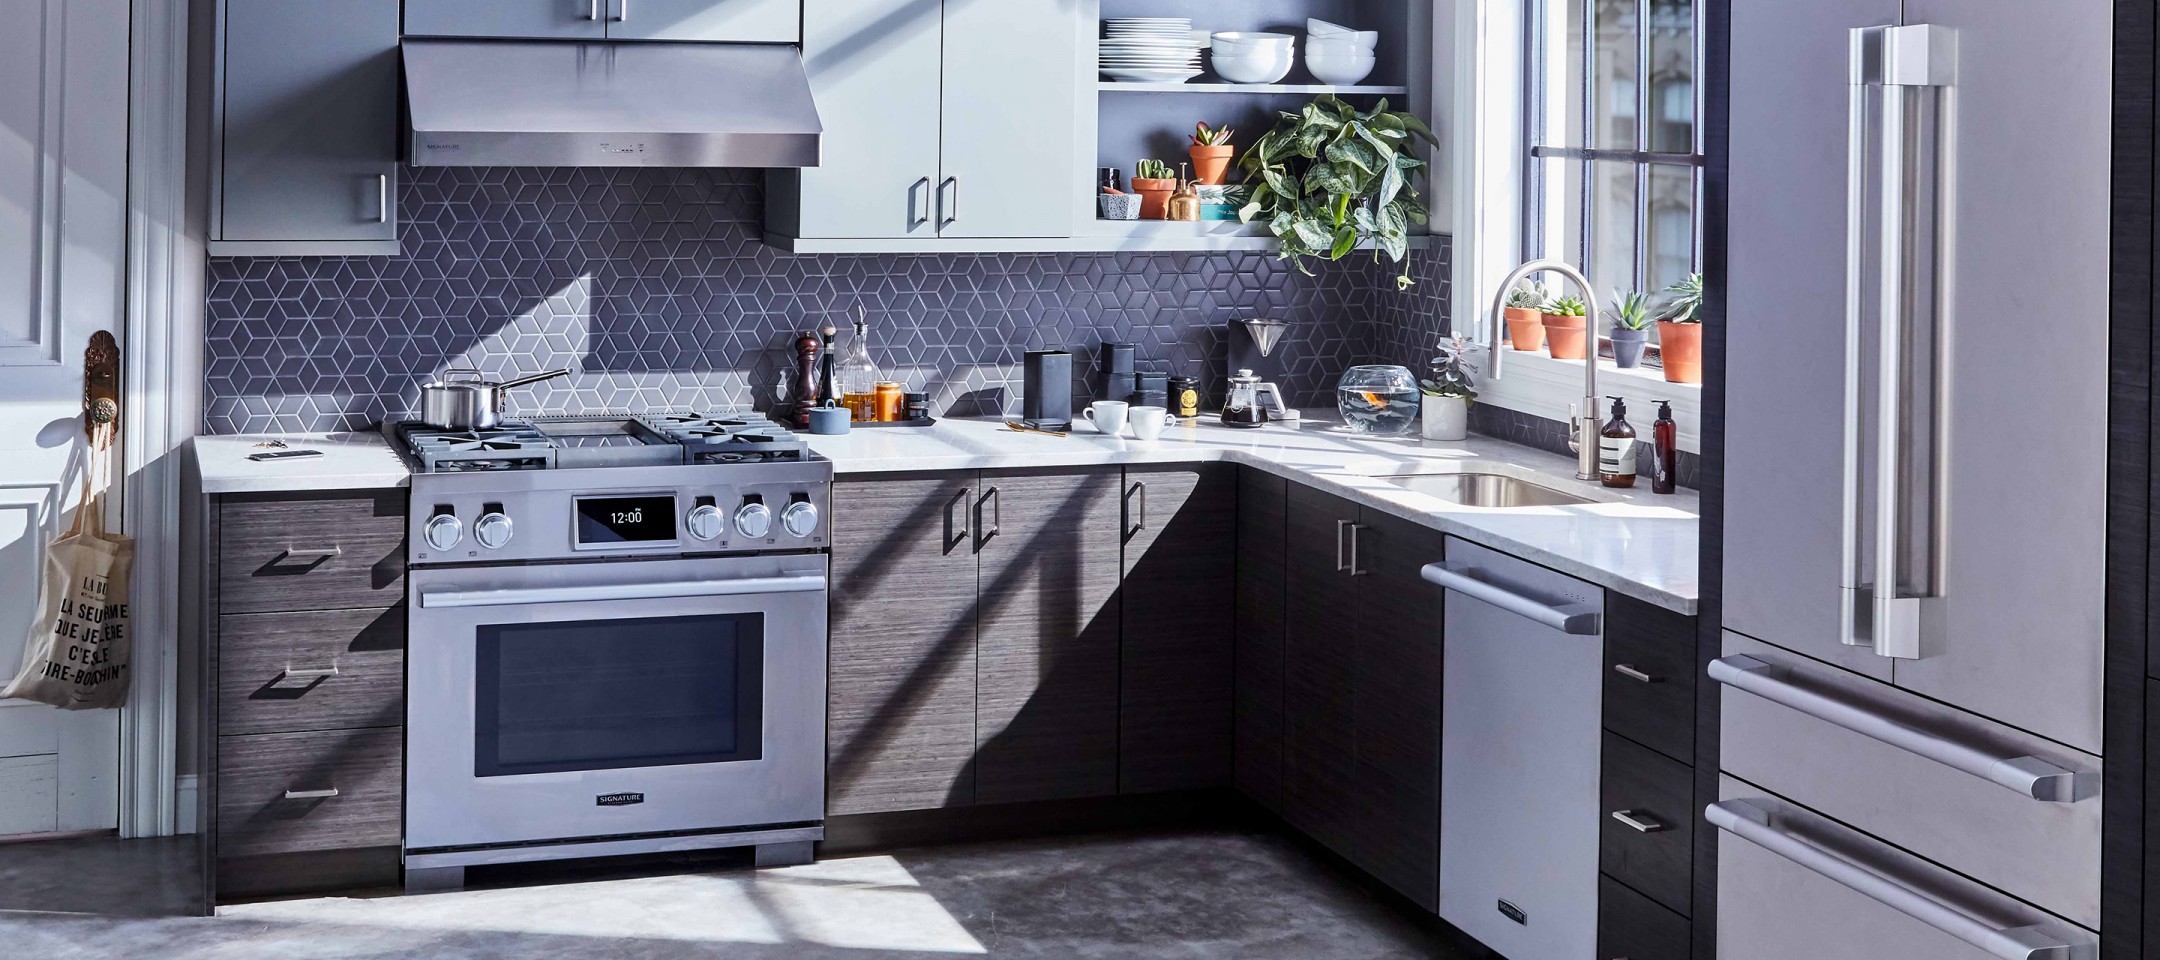 cool kitchen appliances design